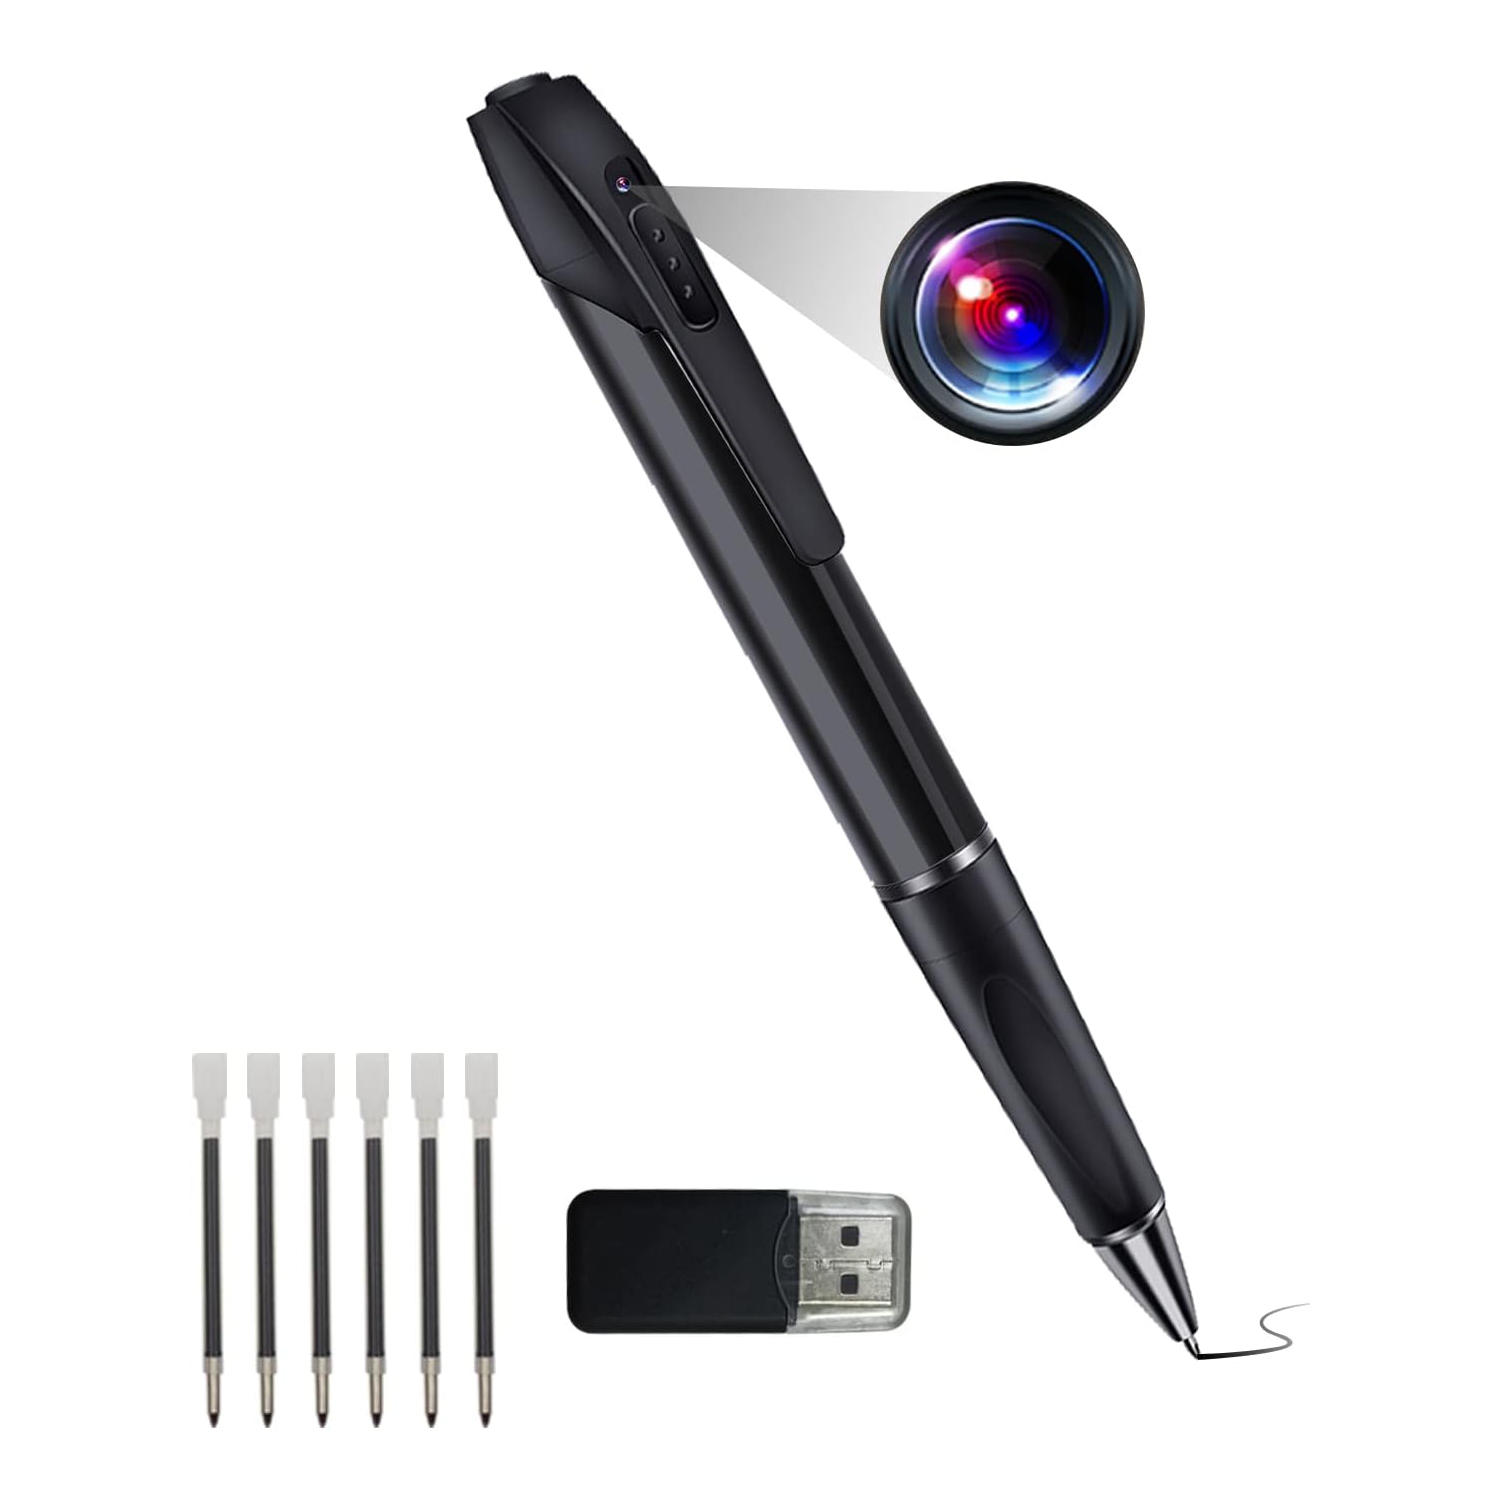 Hidden Camera Pen Spy 1080P Mini Nanny Cam Portable Video Recorder with Loop Recording or Taking Photo, Card Reader